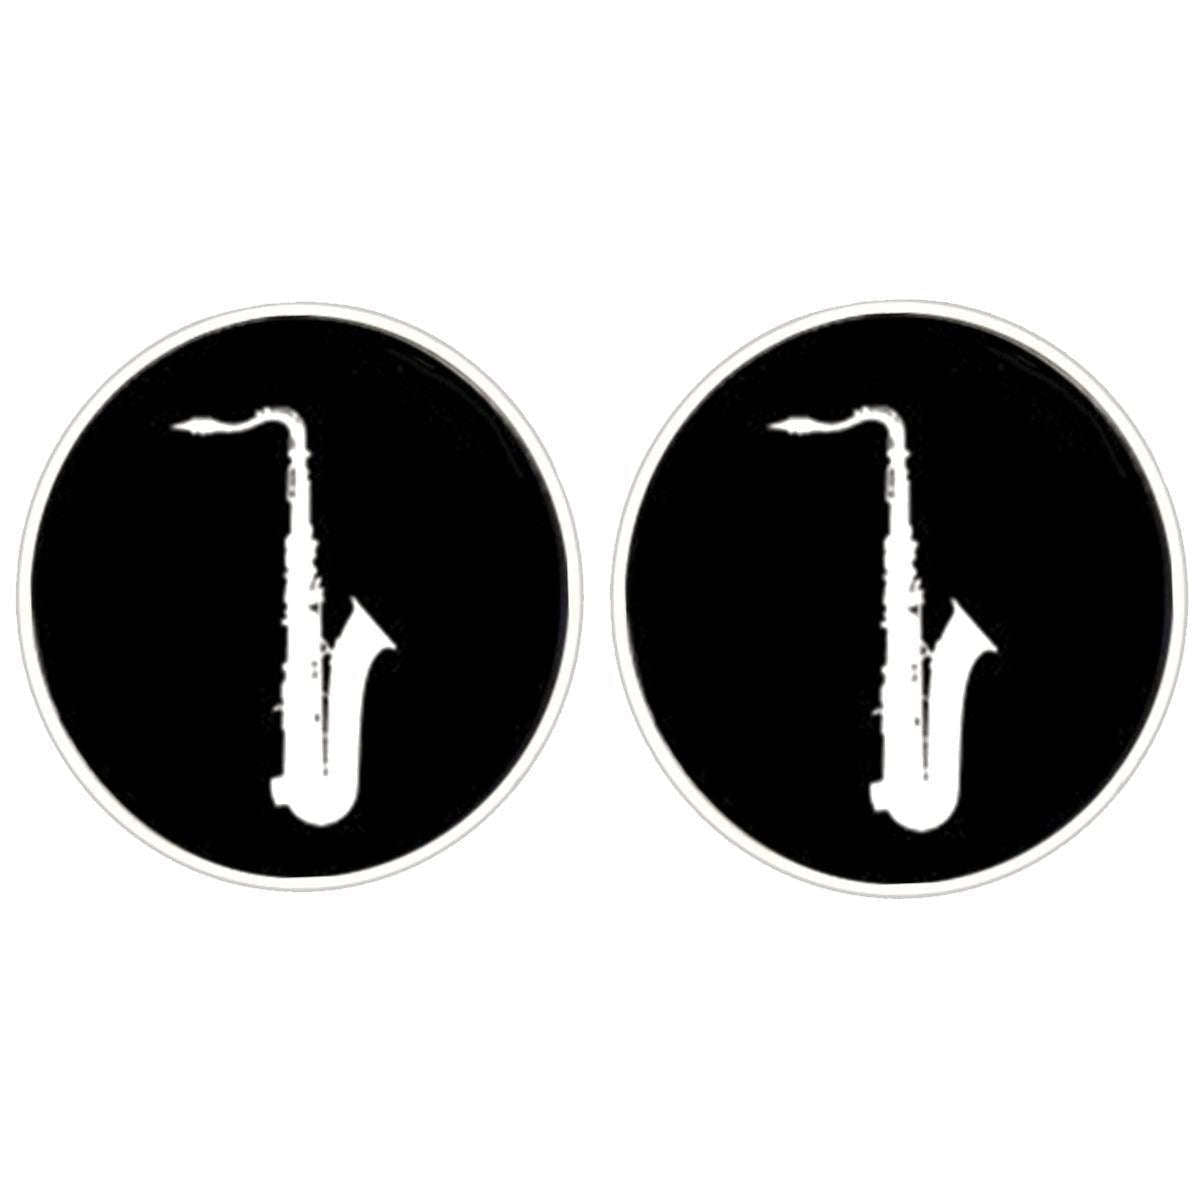 Bassin and Brown Saxophone Cufflinks - Black/White